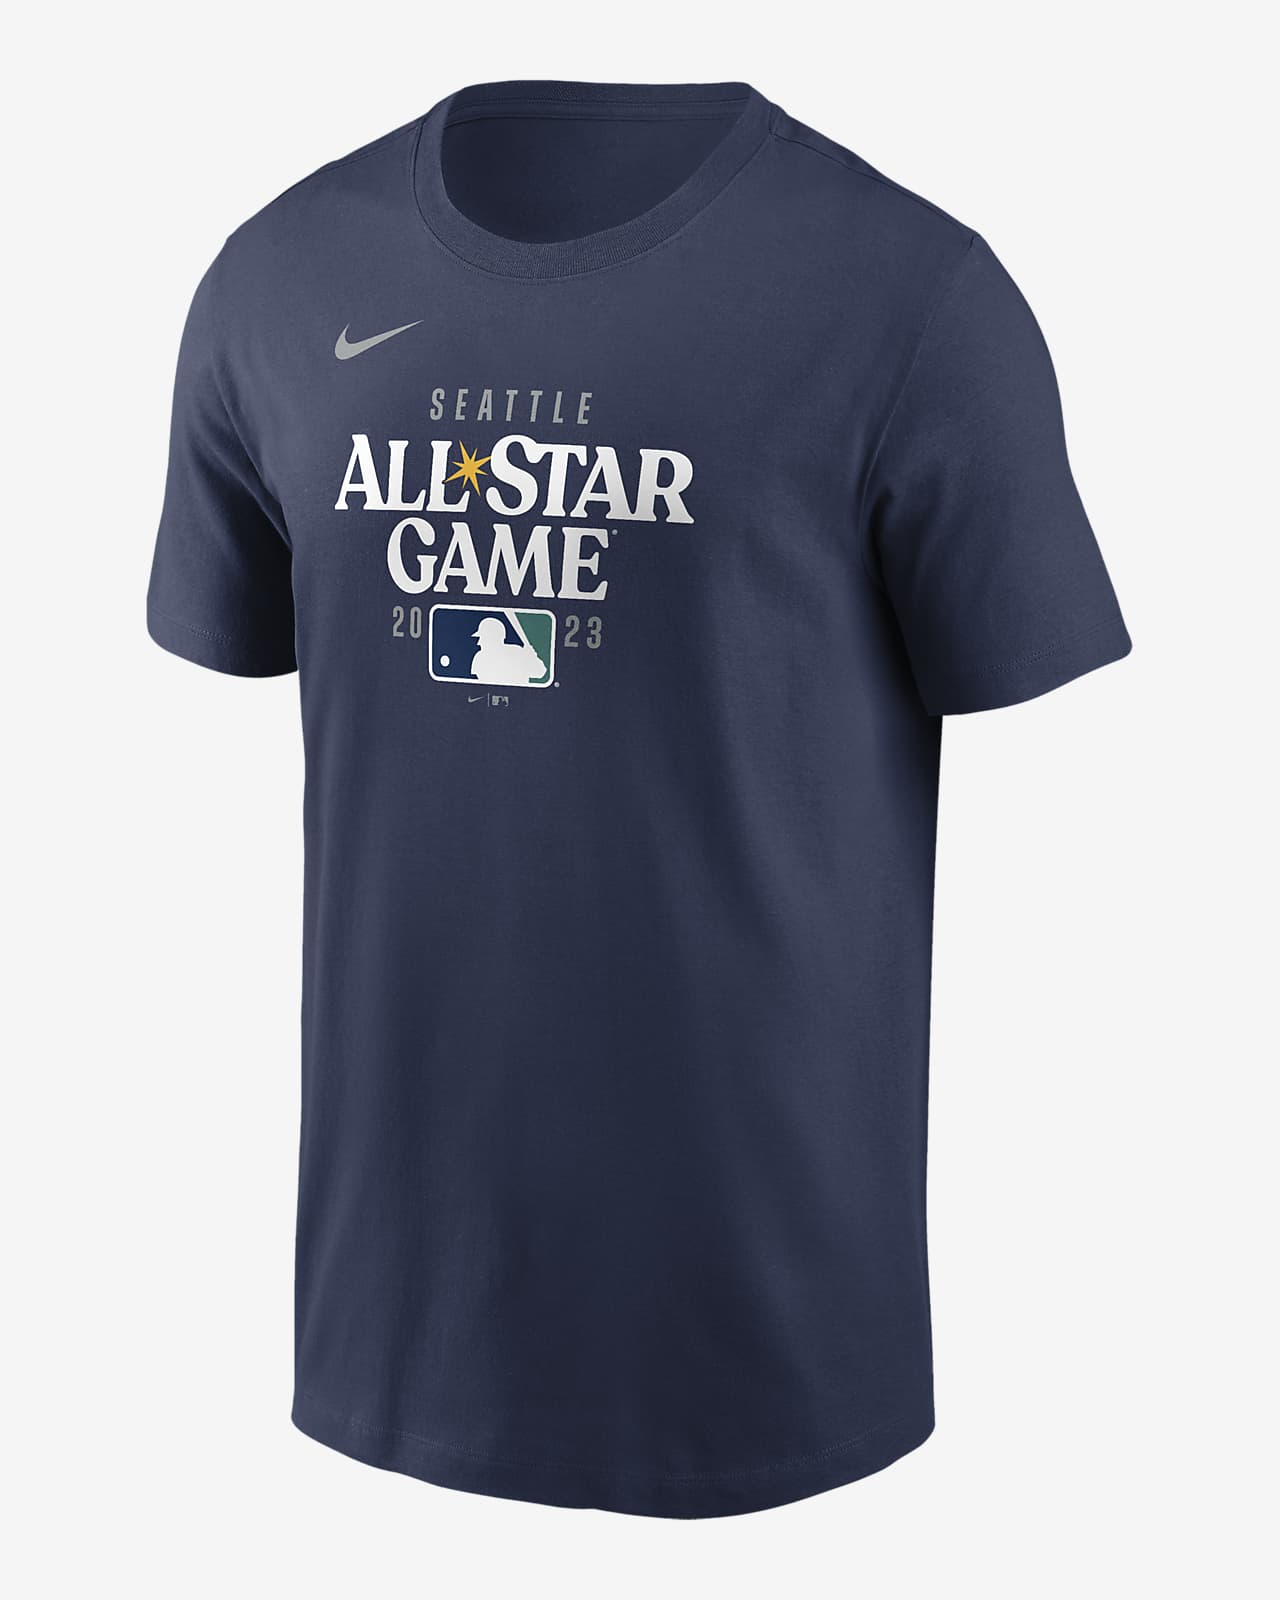 Nike 2013 MLB All Star Game T-Shirt